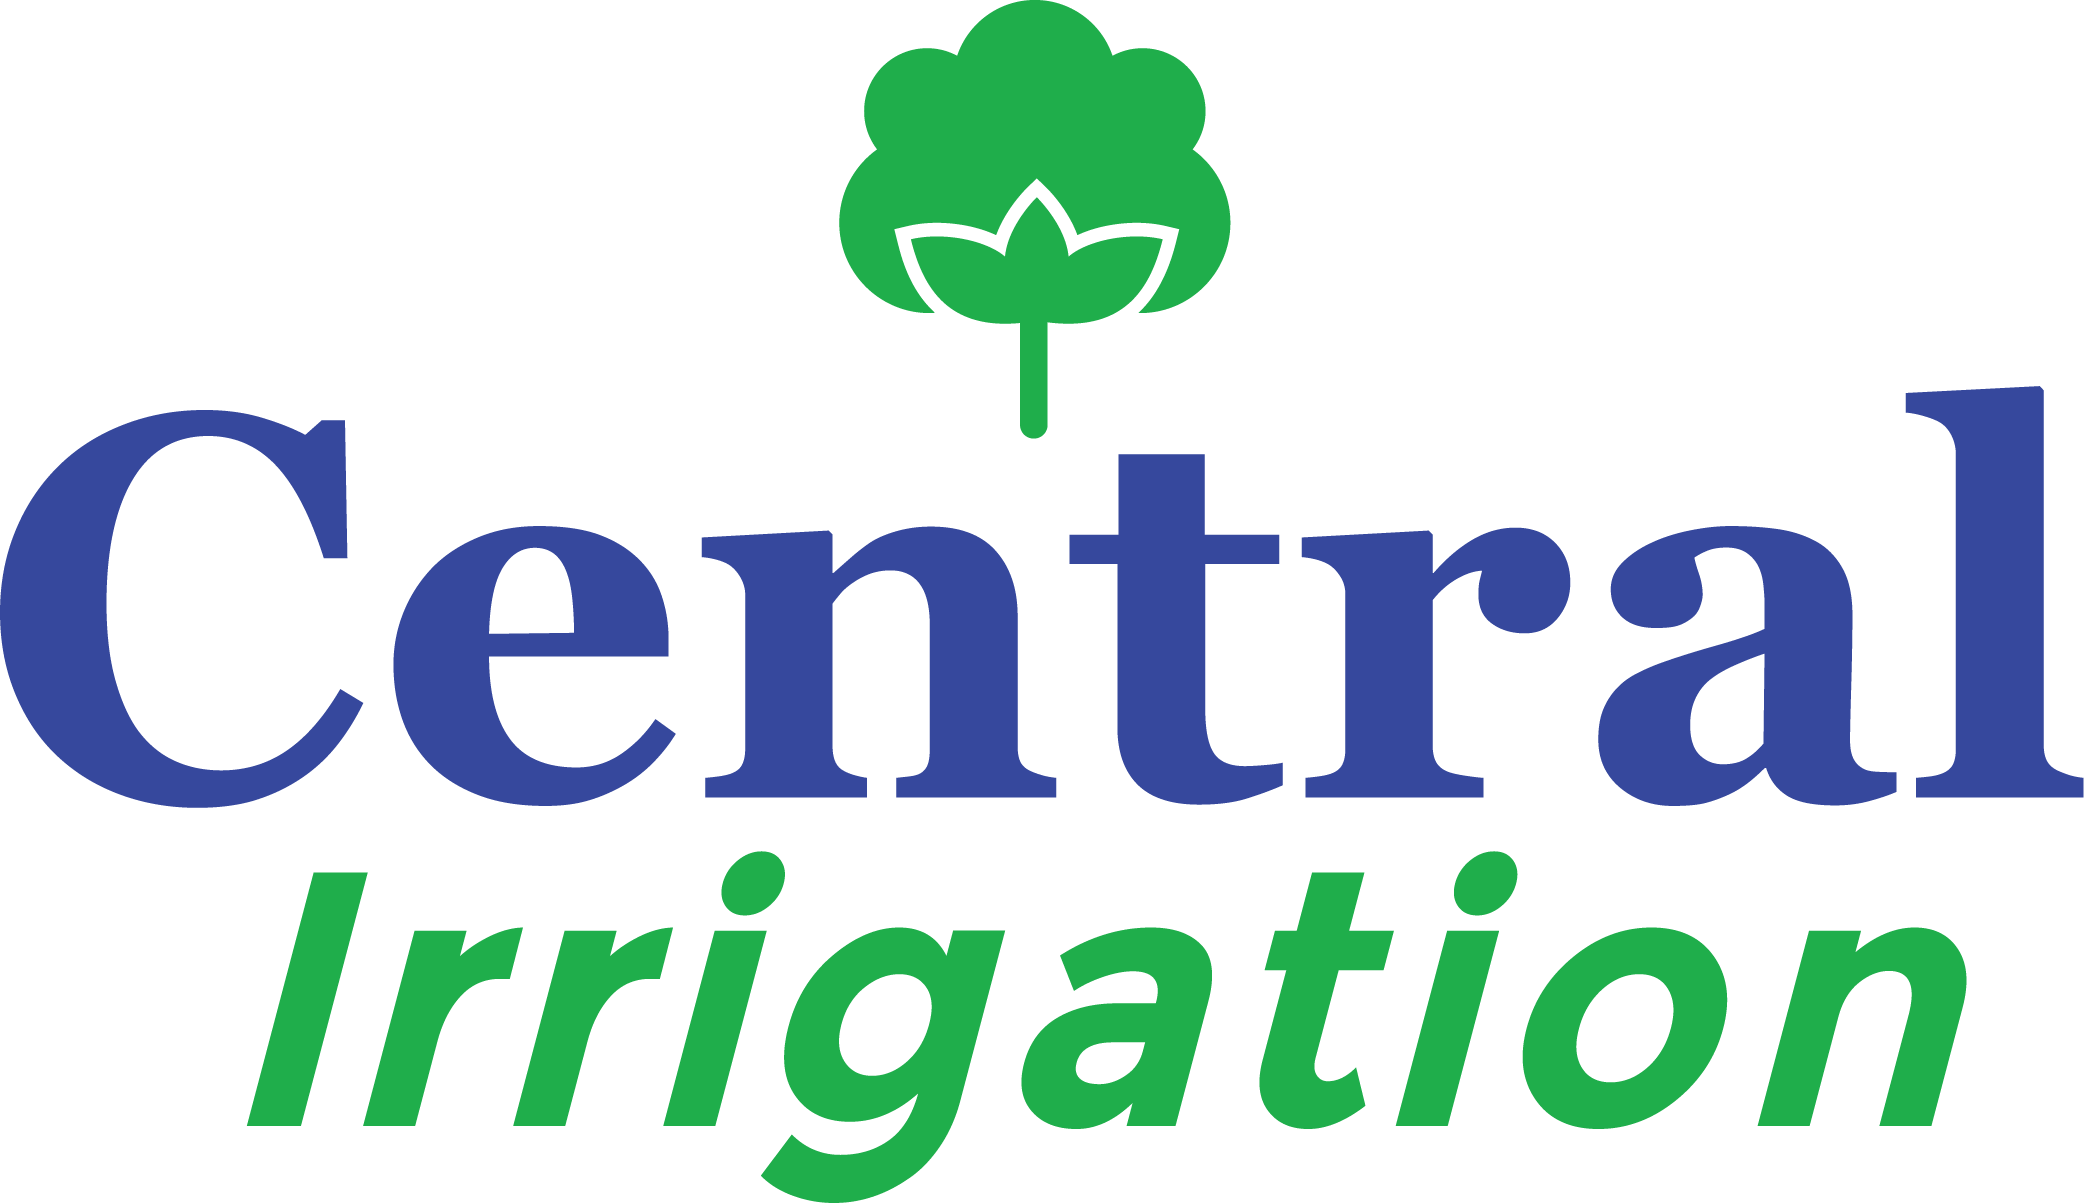 Central Irrigation